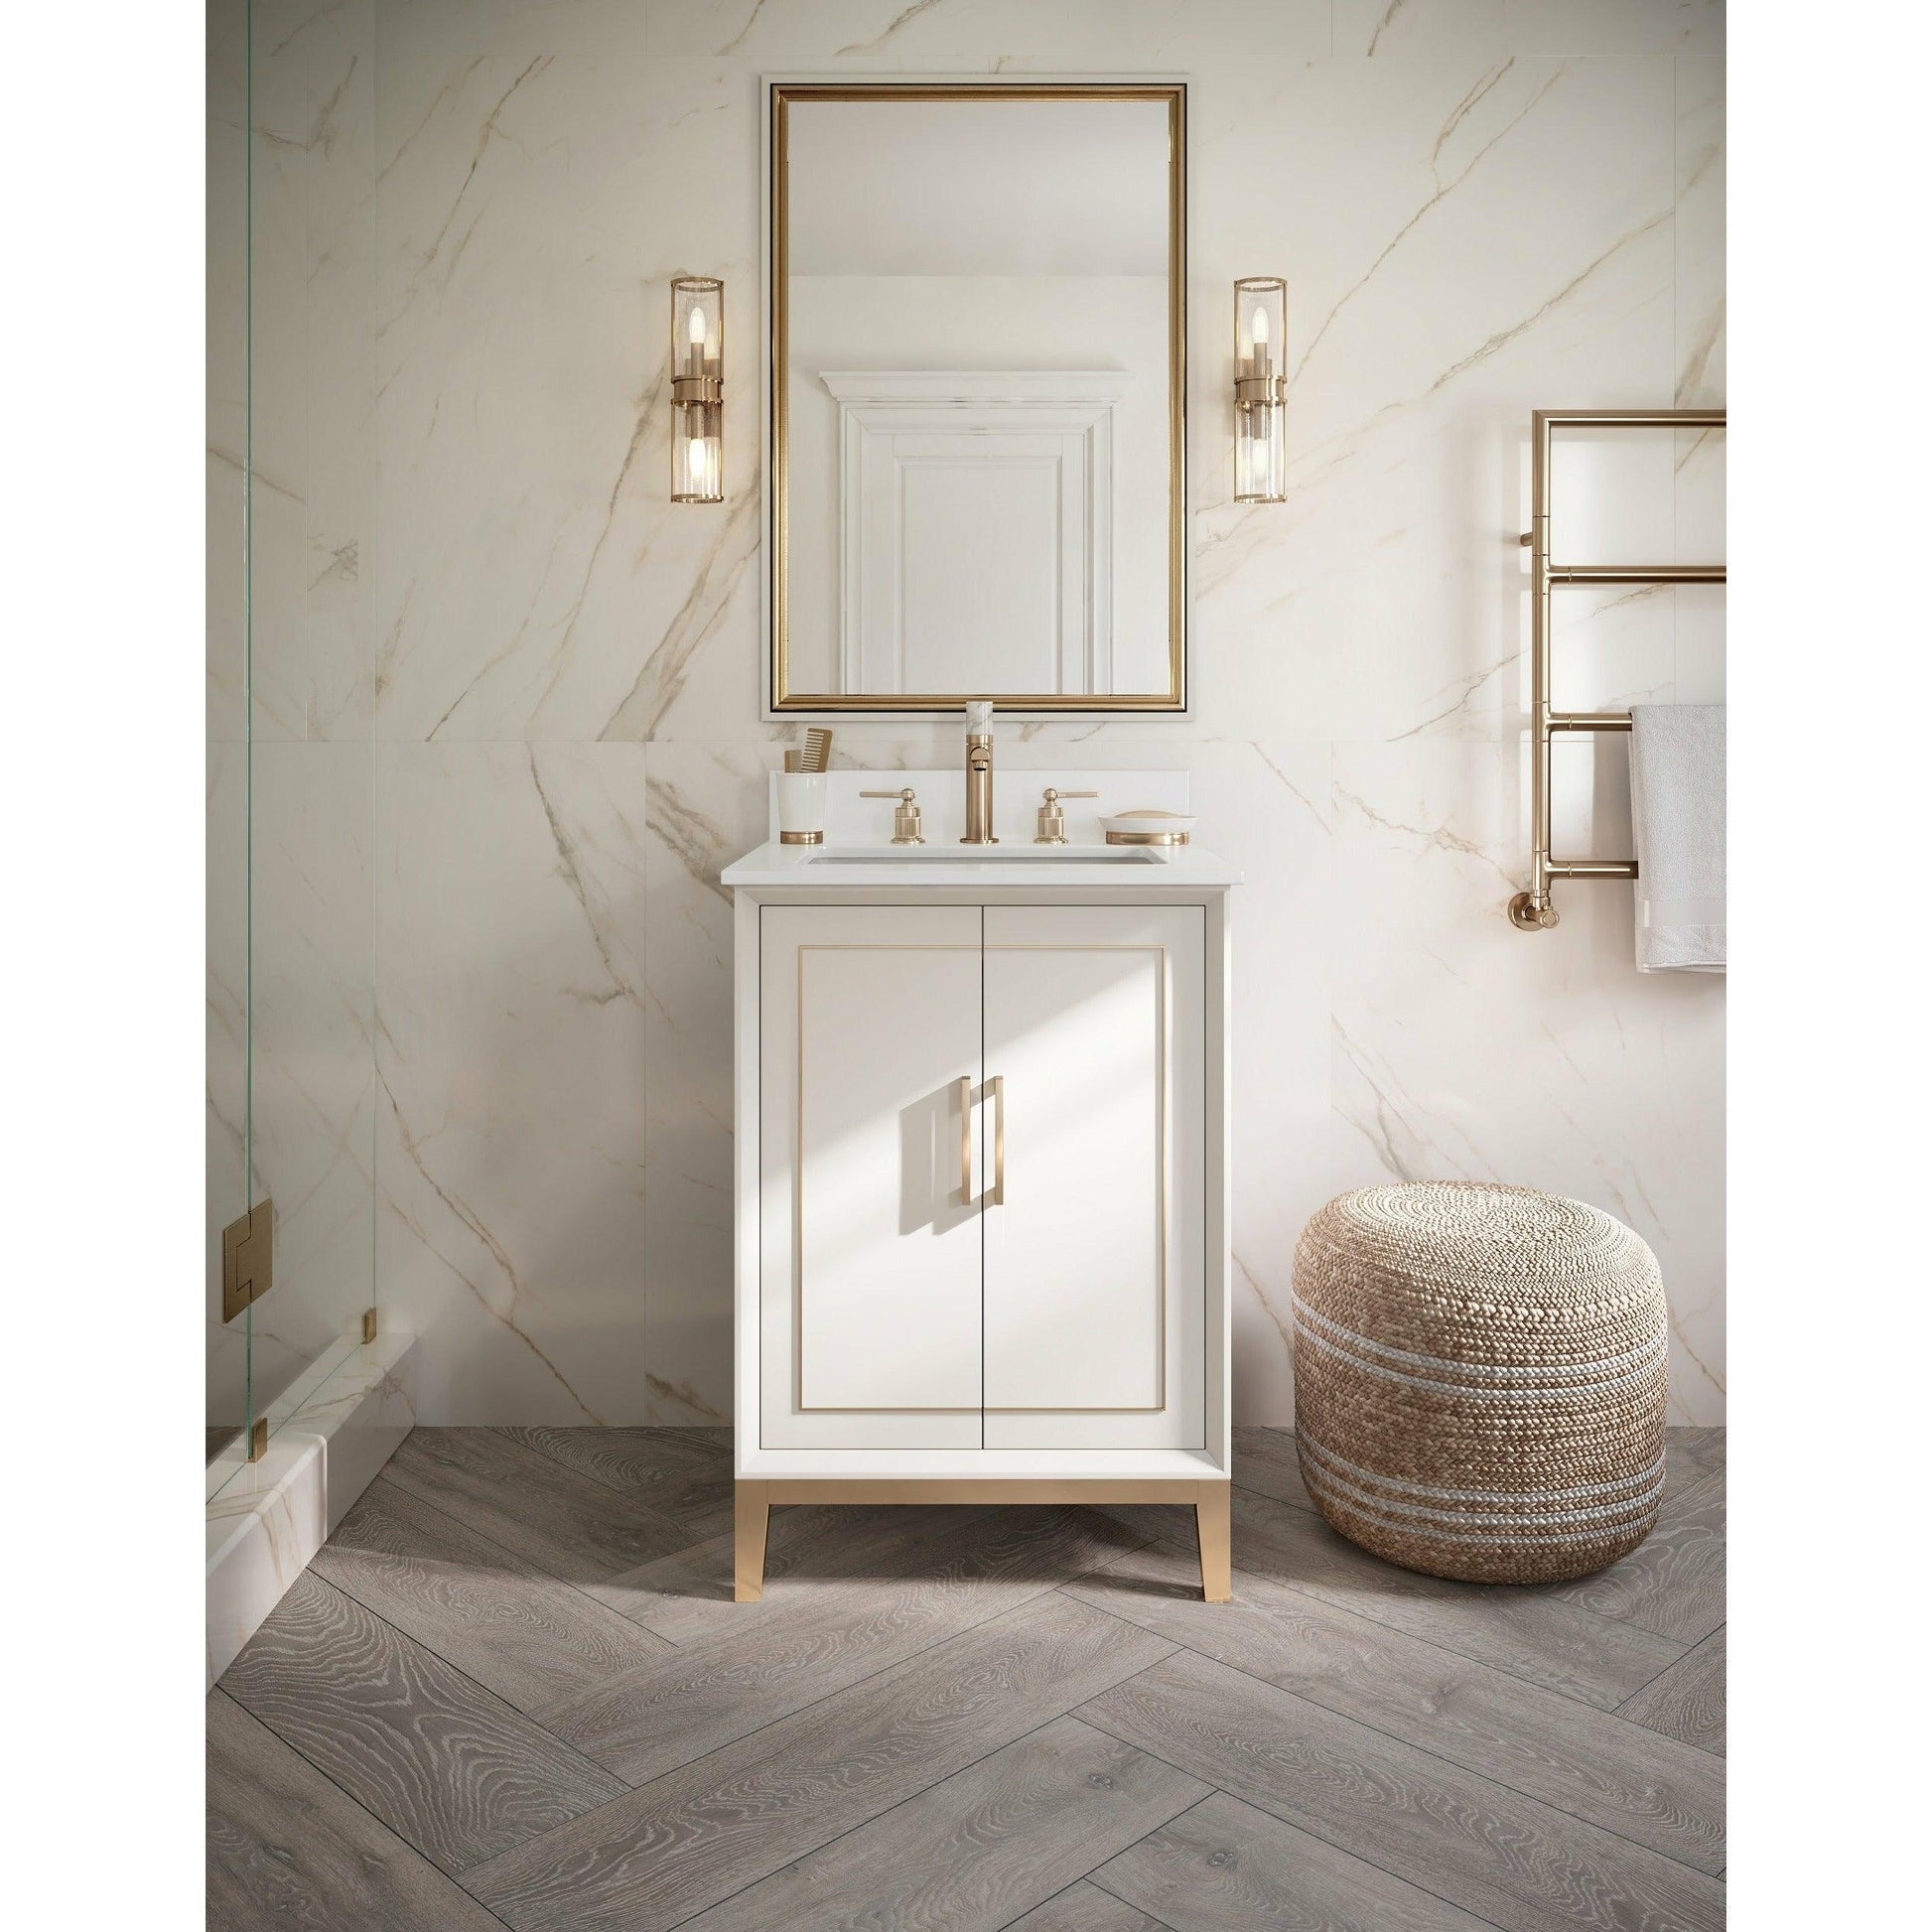 
  
  BEMMA Design Gracie Single Bathroom Vanity Set With White Quartz or Carrara Marble Top
  
